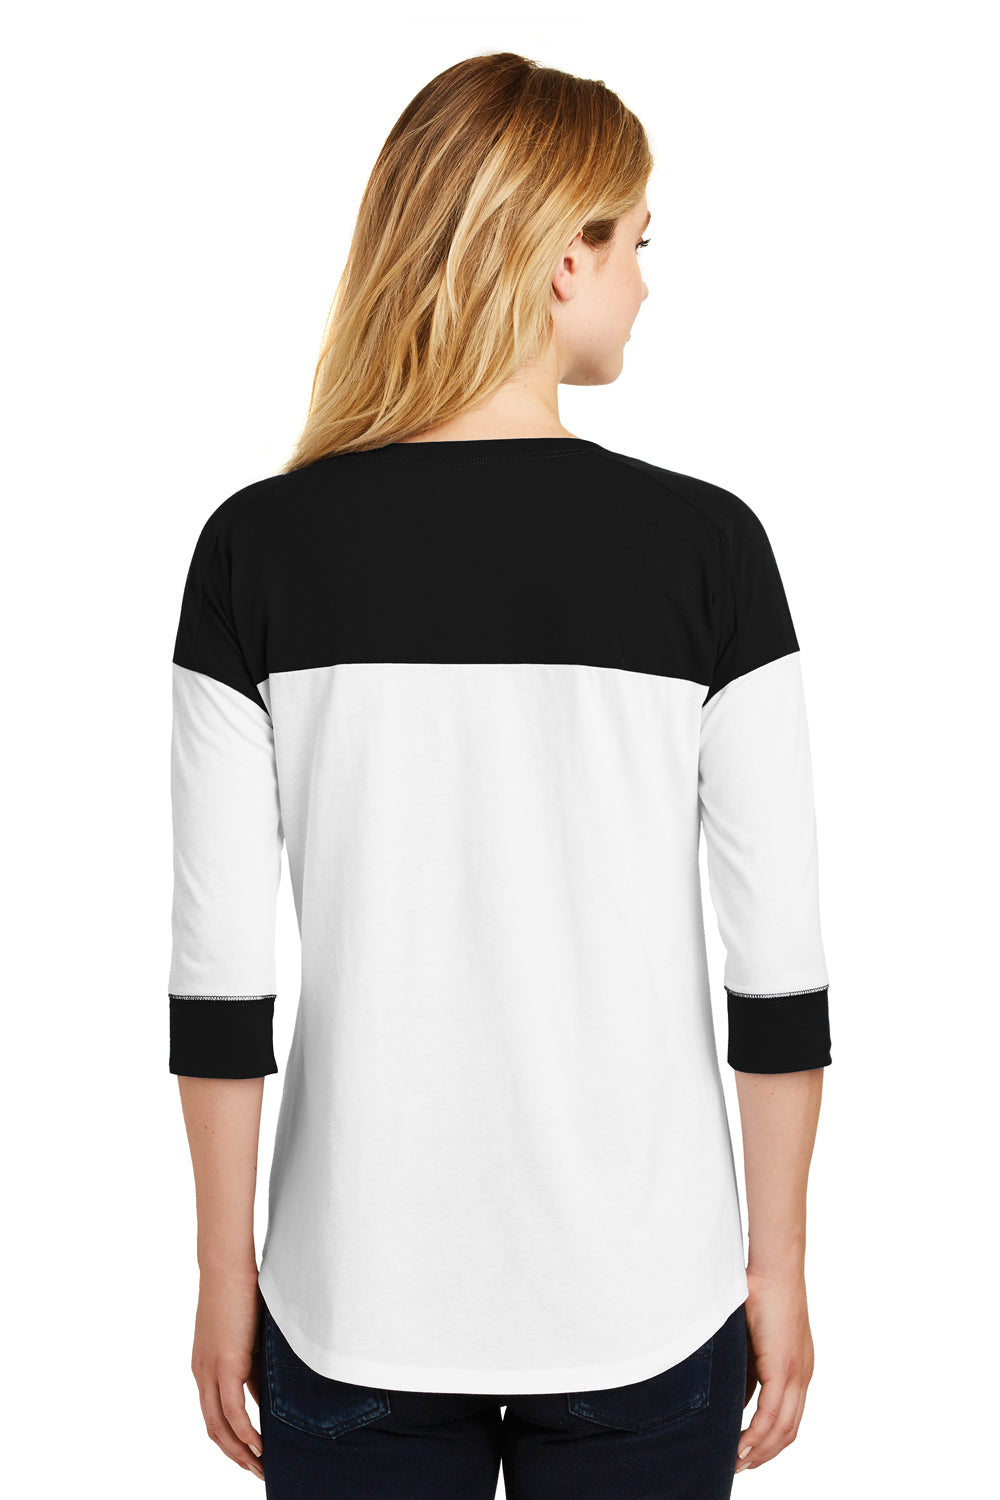 New Era LNEA104 Womens Heritage 3/4 Sleeve Crewneck T-Shirt Black/White Back